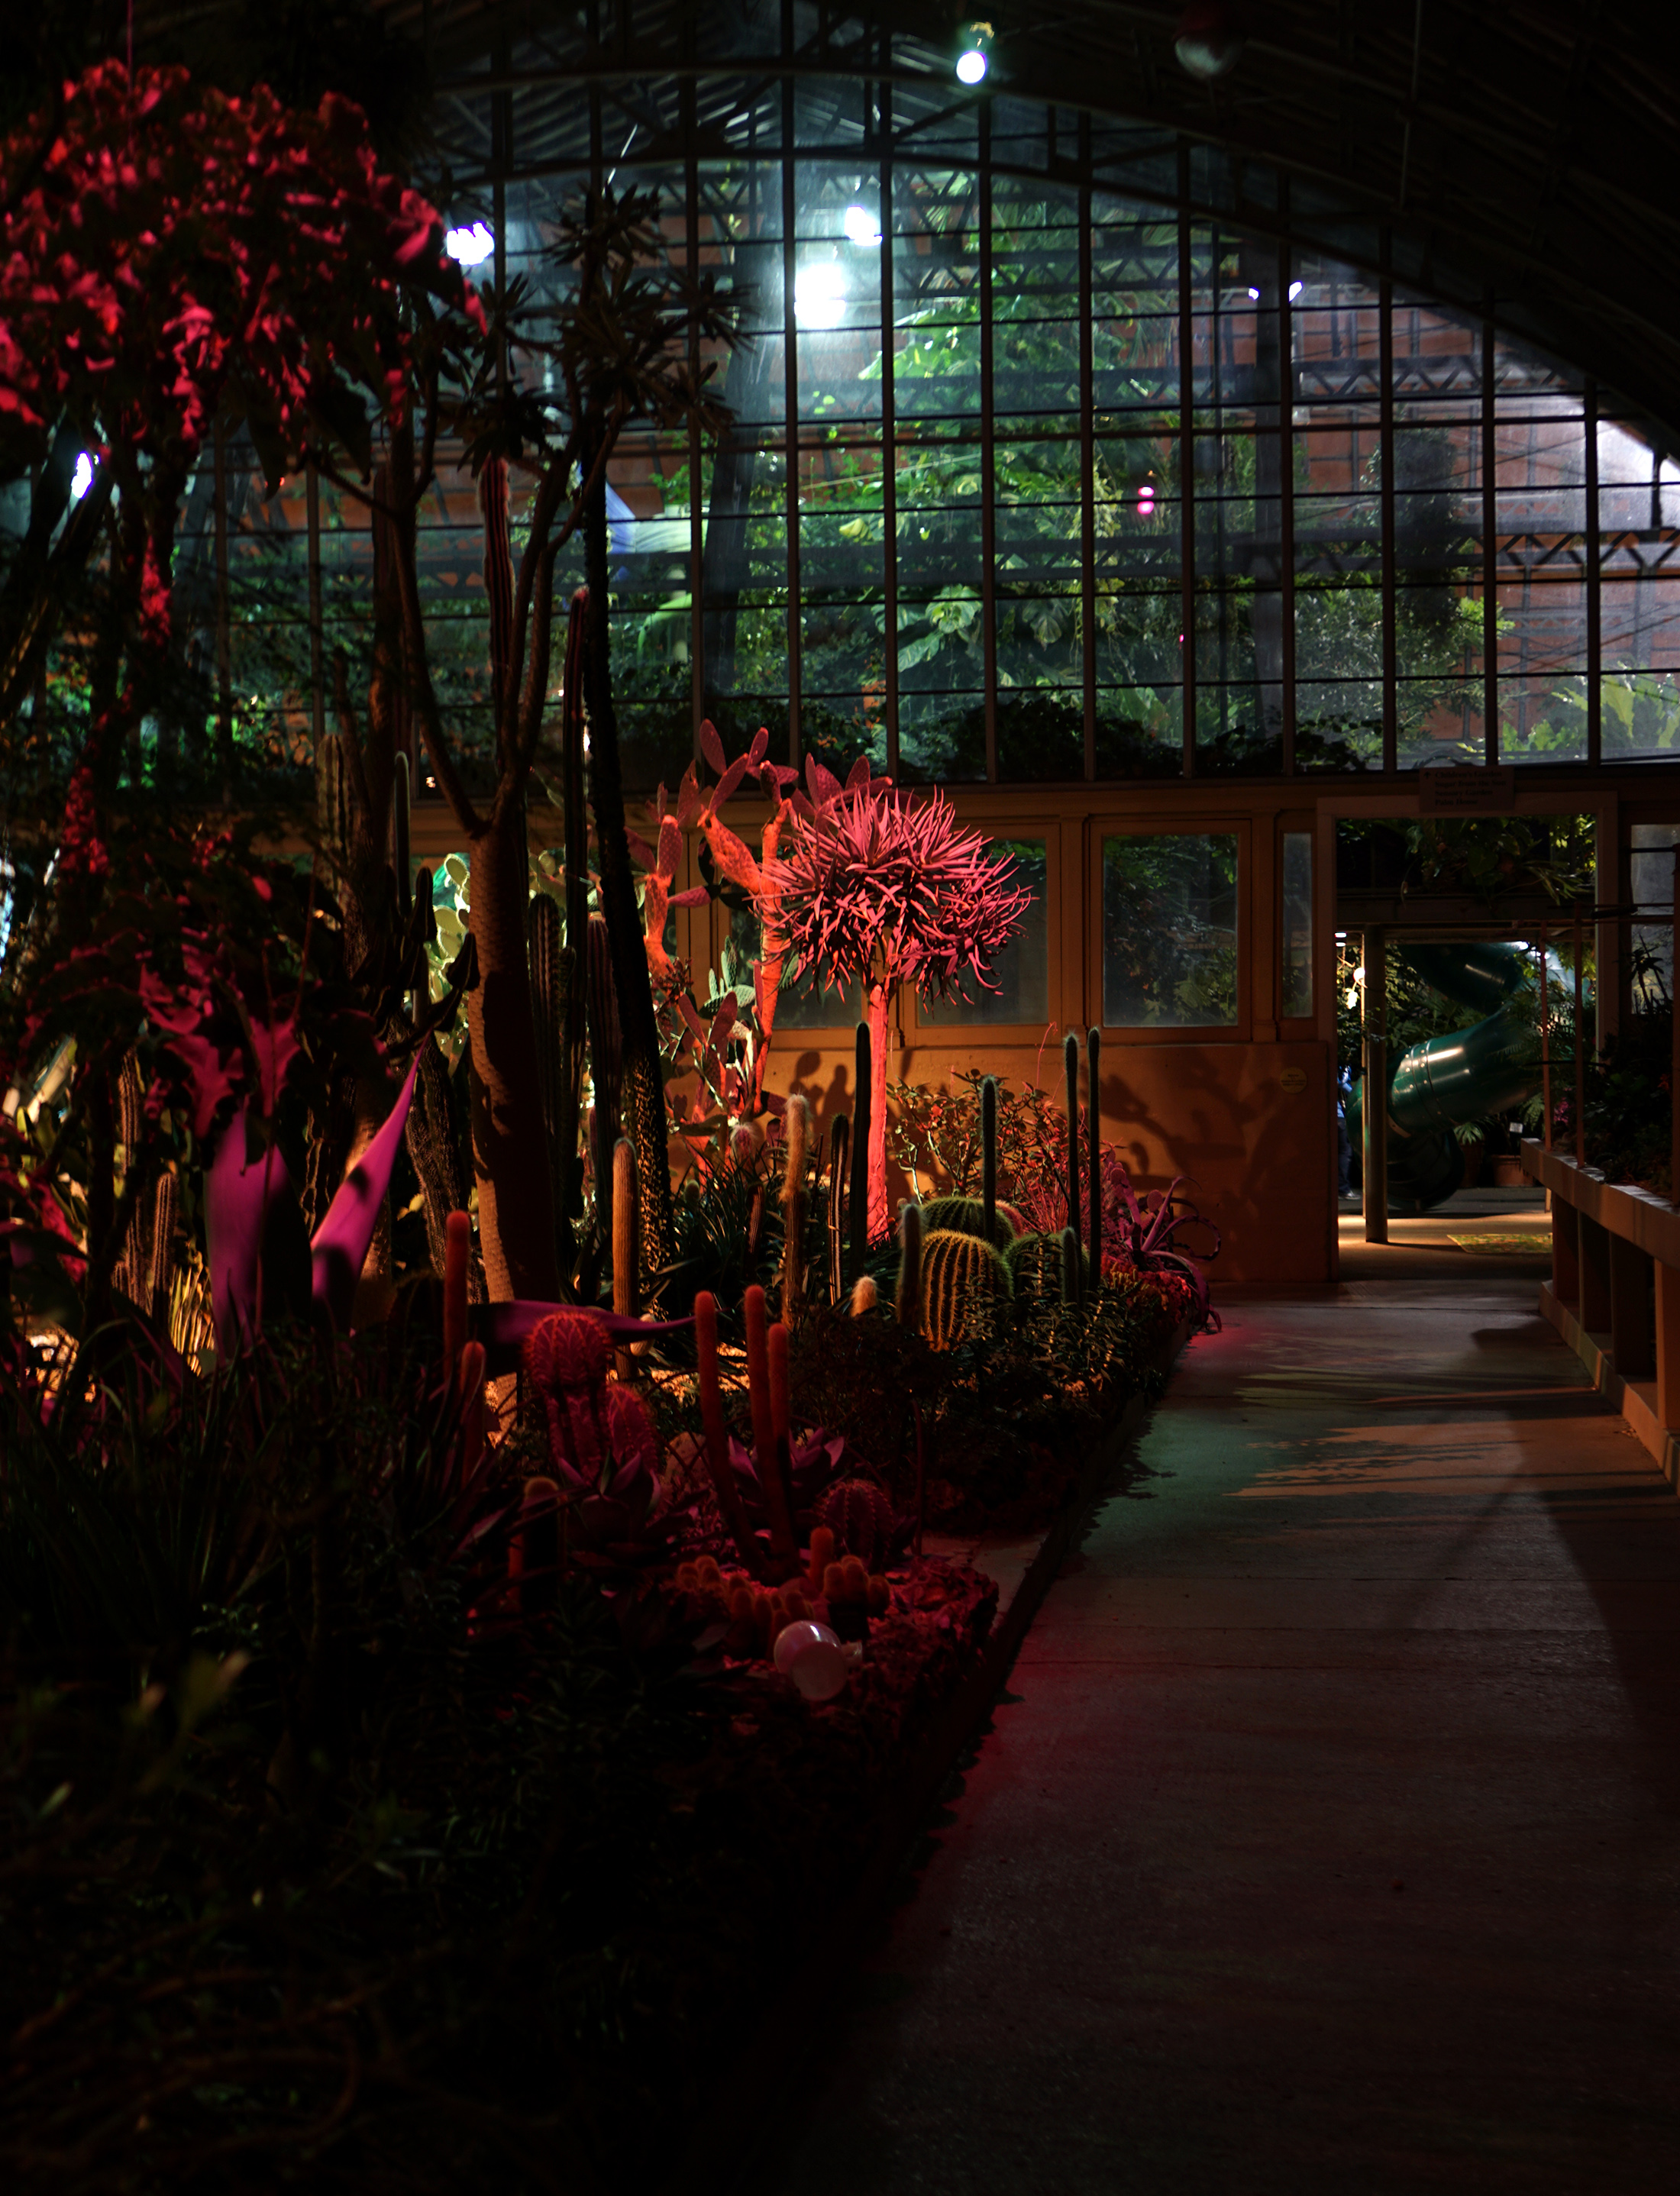 The desert room, Garfield Park Conservatory at night, Chicago / Darker than Green